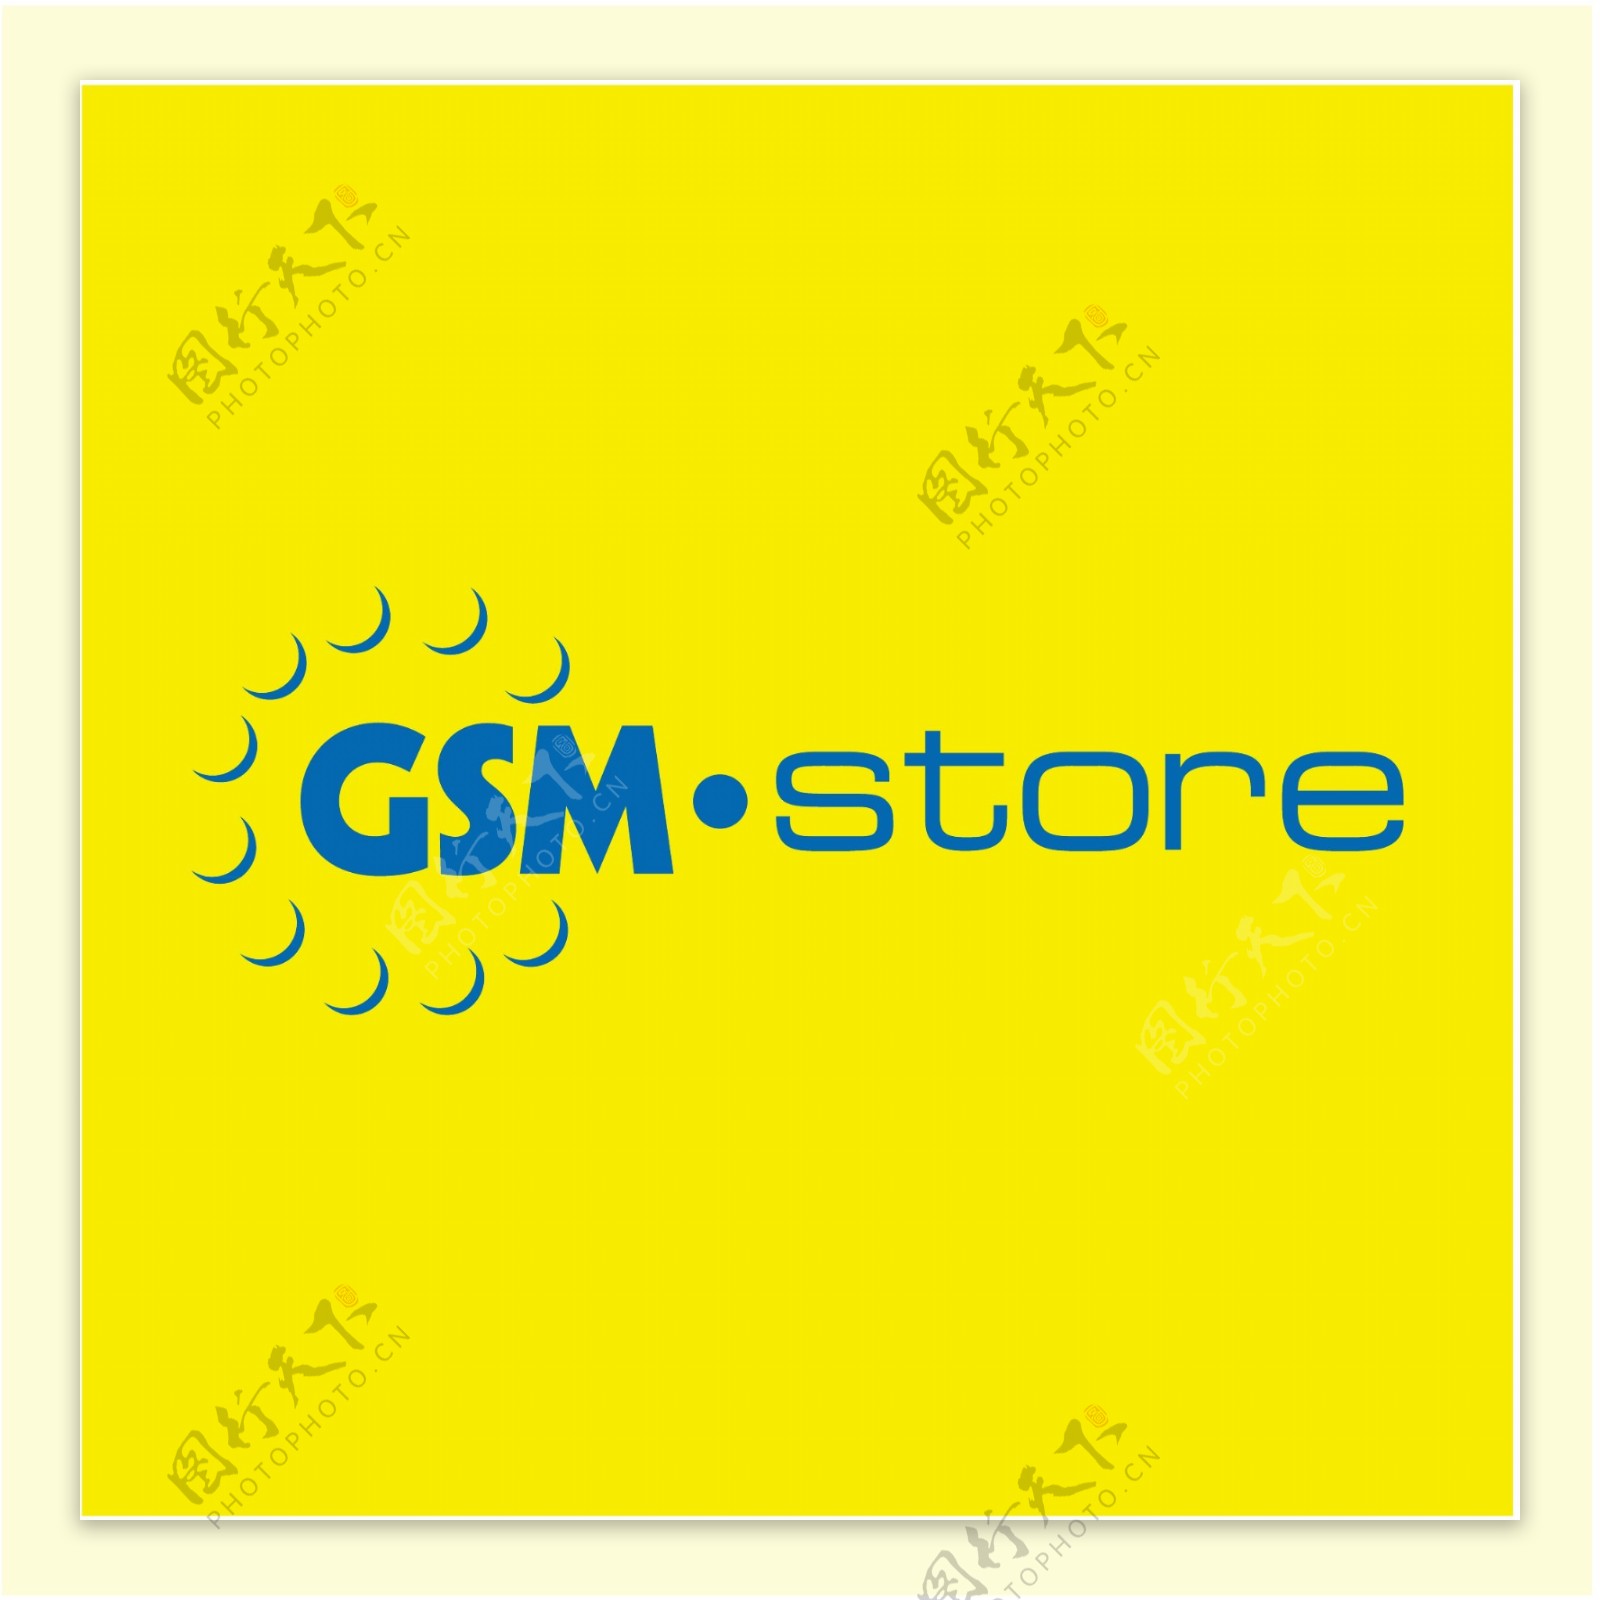 GSM店